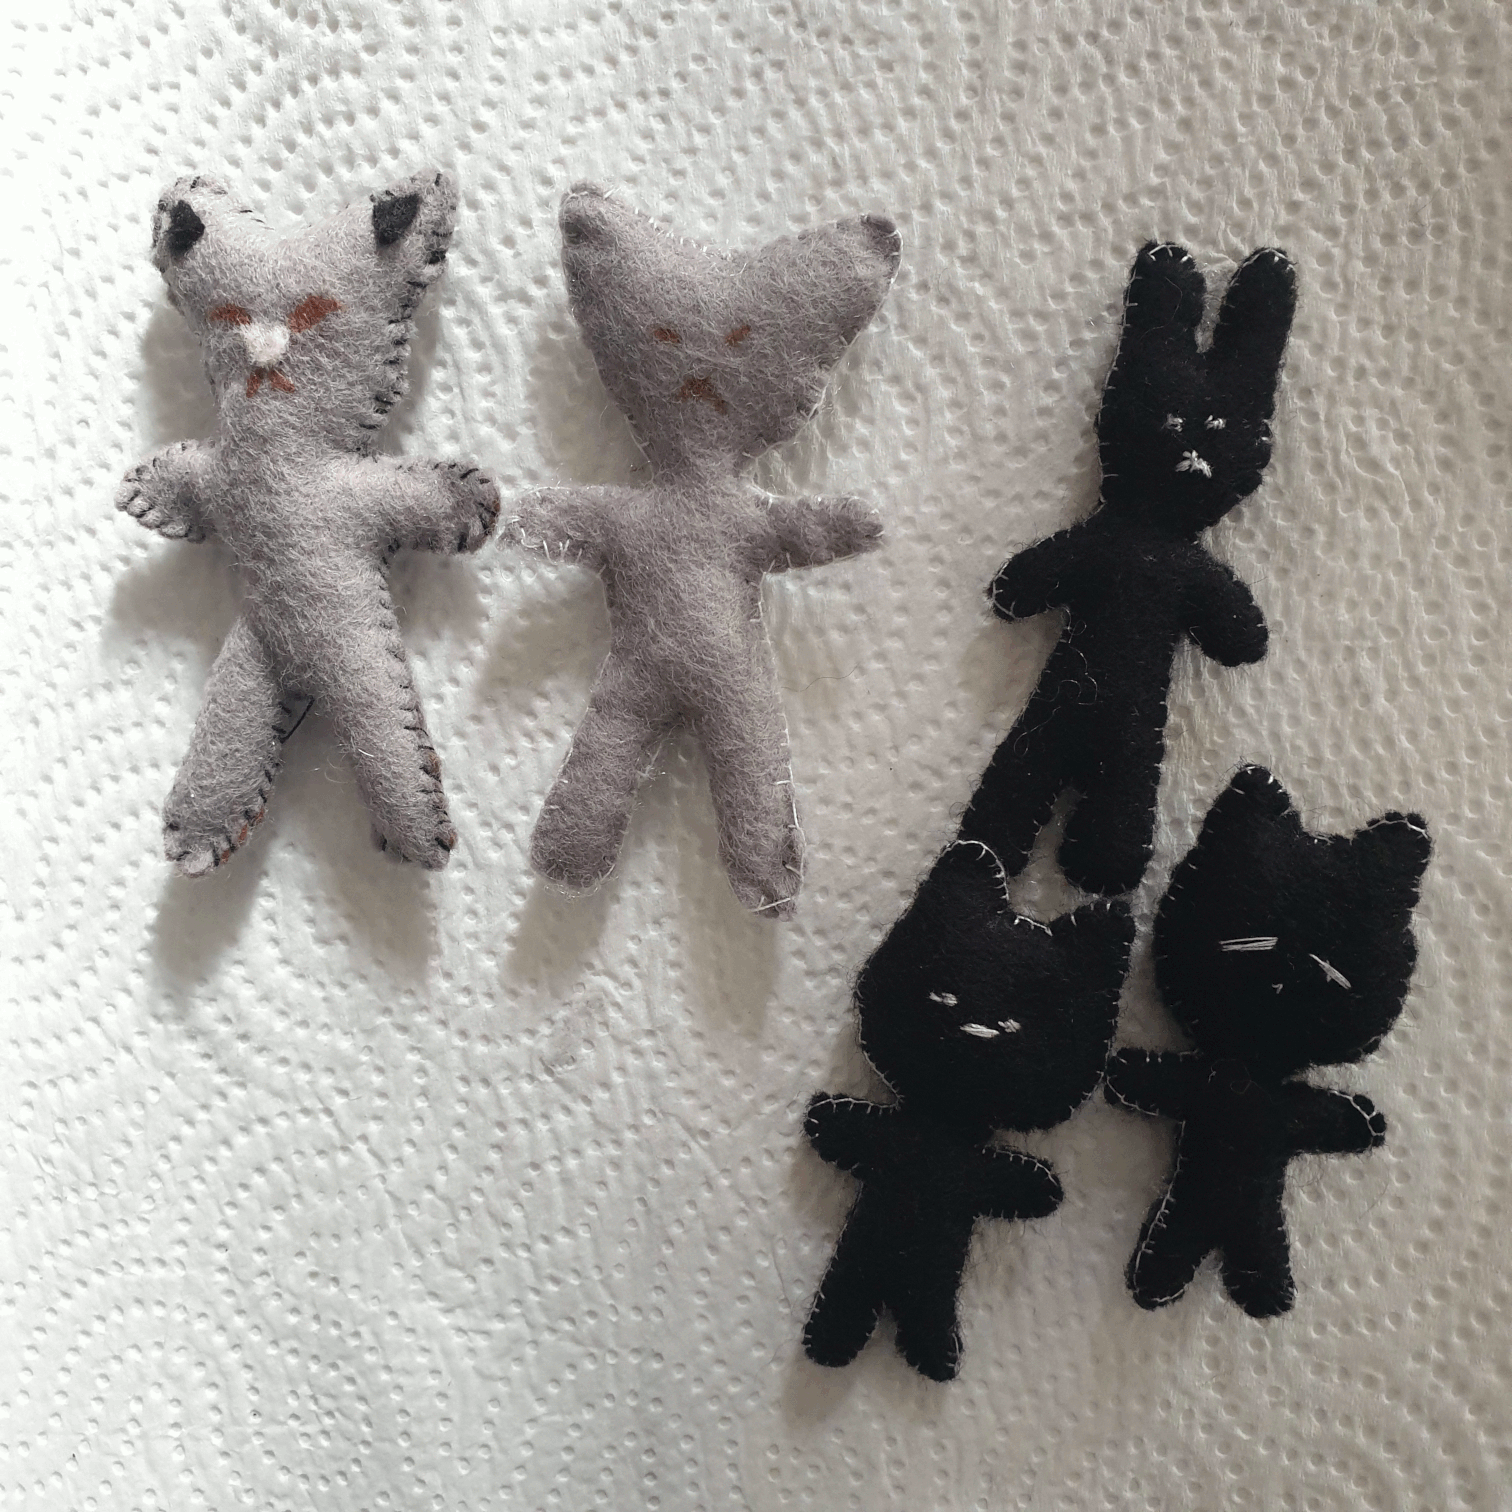 2 felt grey cats with black stitching; one black bunny with white stitching; 2 black cats with white stitching